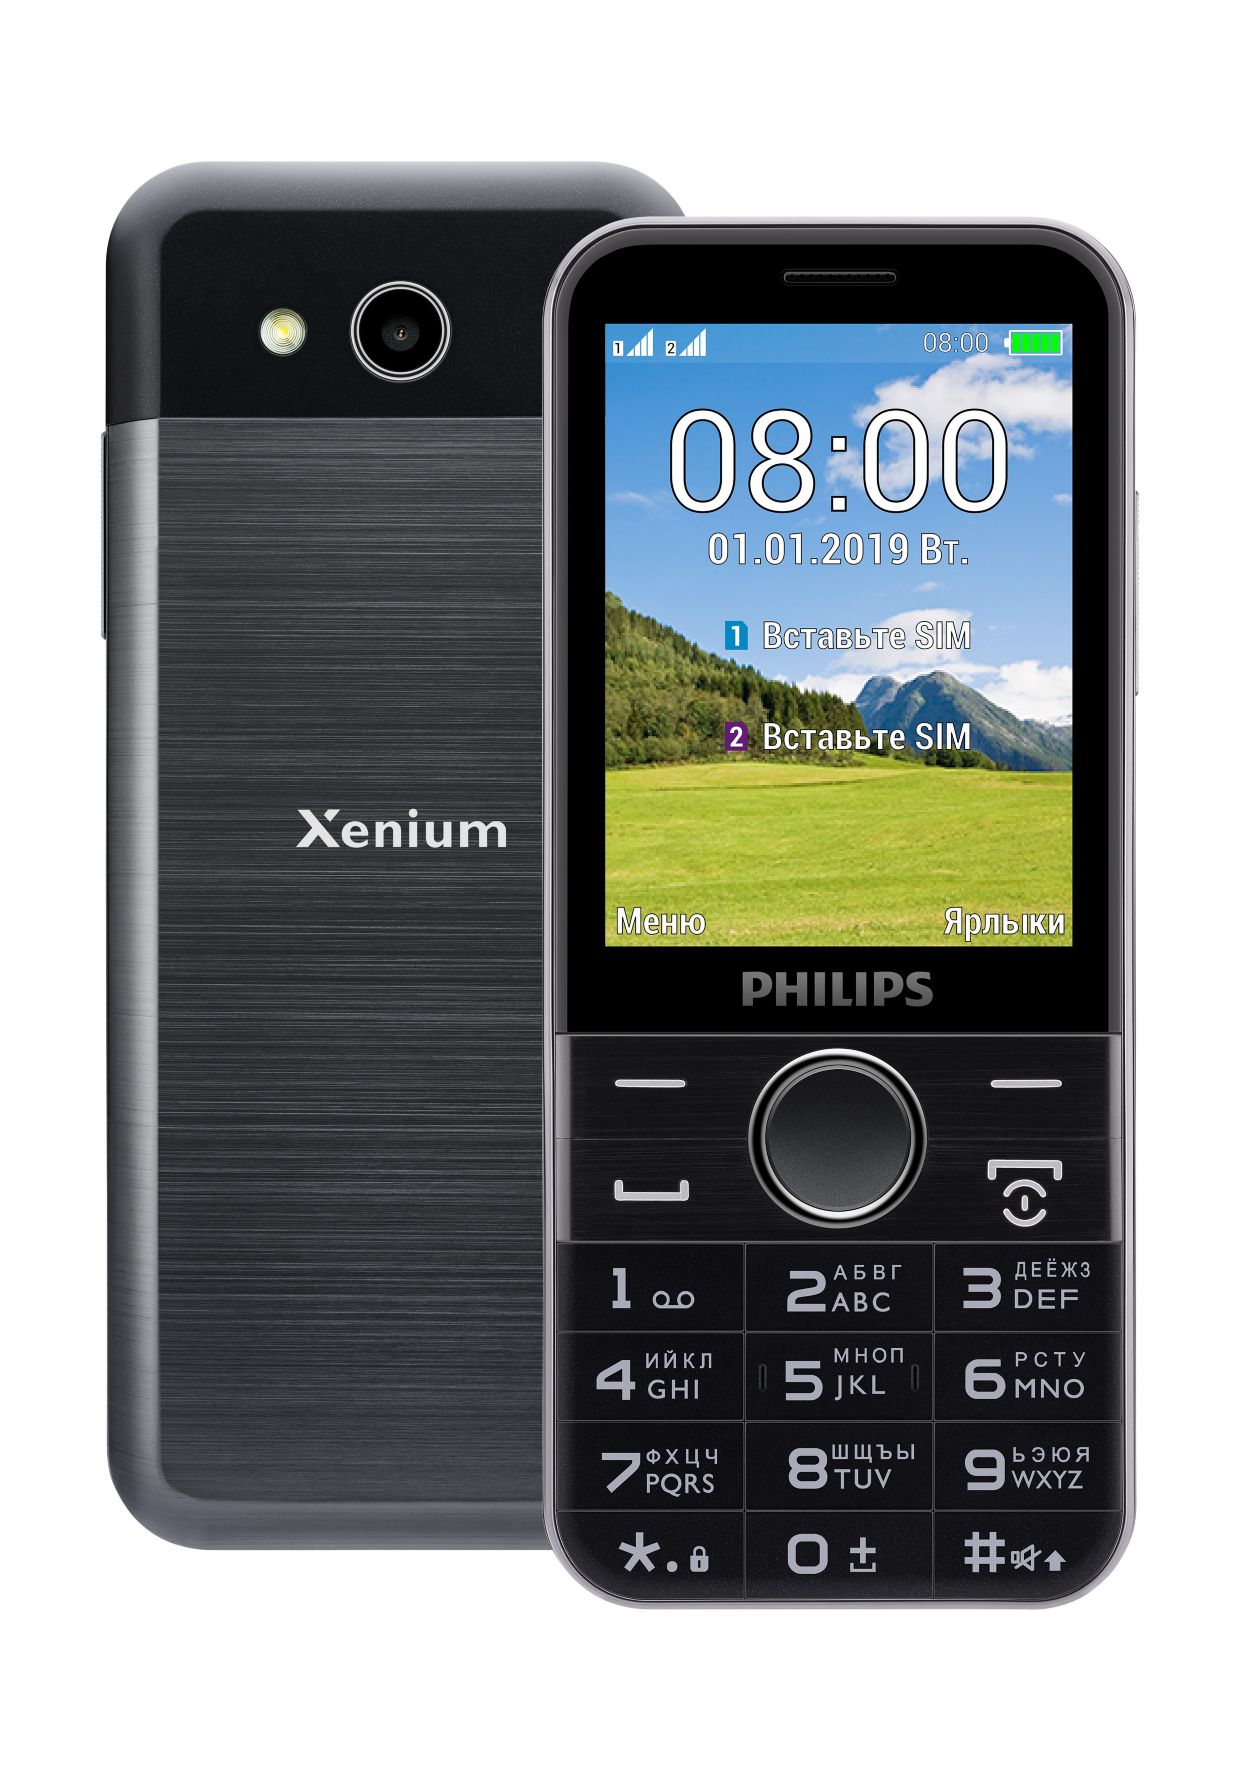 Филипс кнопочный цена. Philips Xenium e580. Philips Xenium e590. Philips Xenium e580 Black. Телефон Philips Xenium e580.